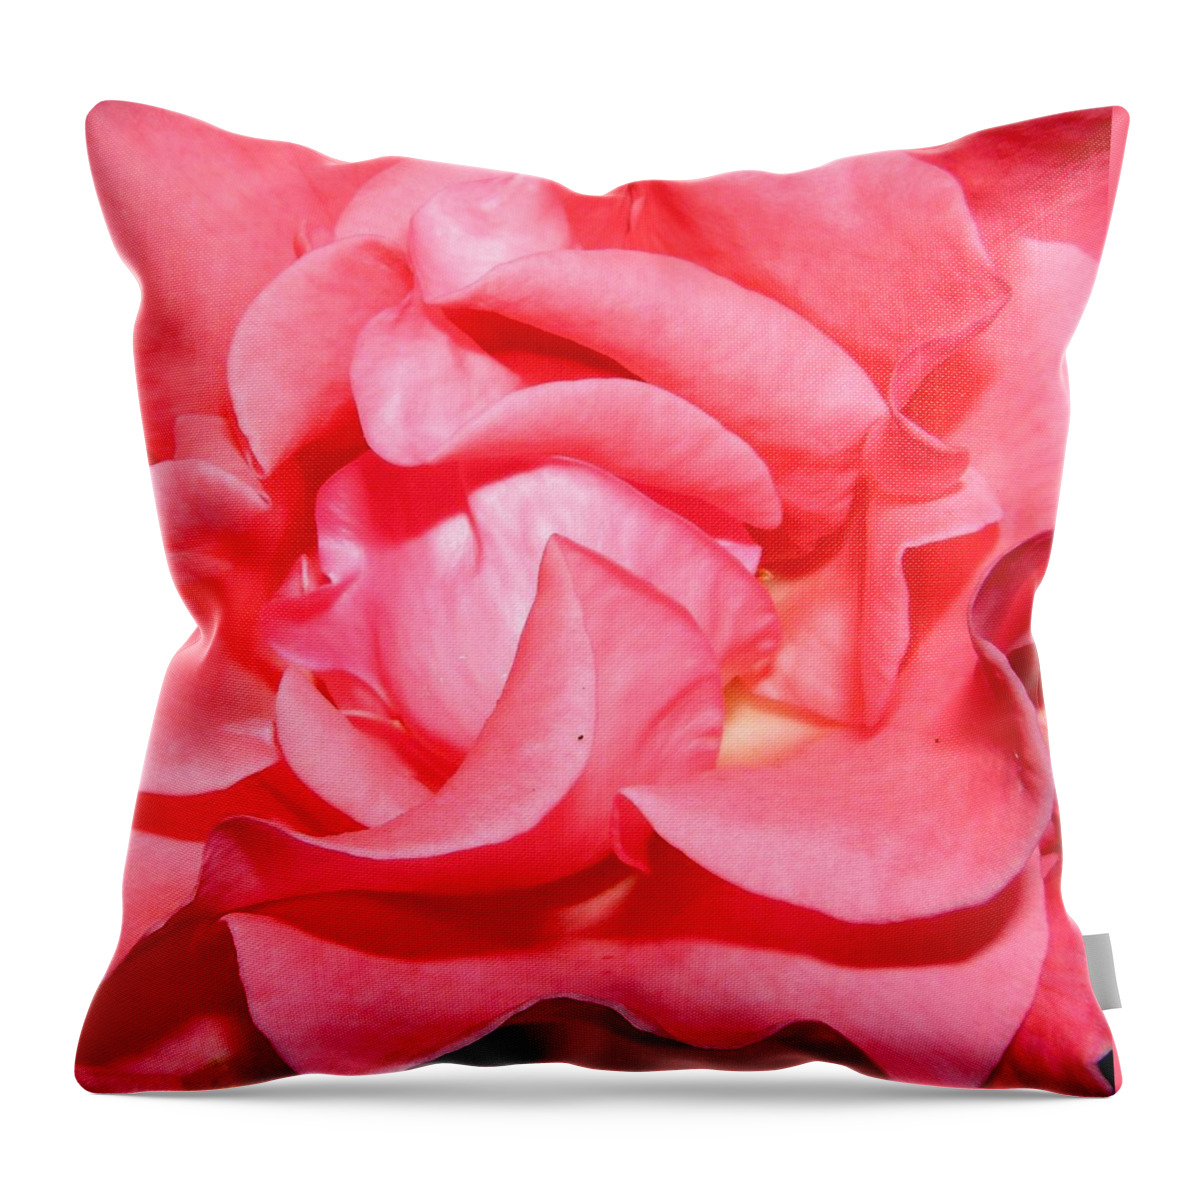 Pink Throw Pillow featuring the photograph Delicate Swirls Of Pin by Kim Galluzzo Wozniak